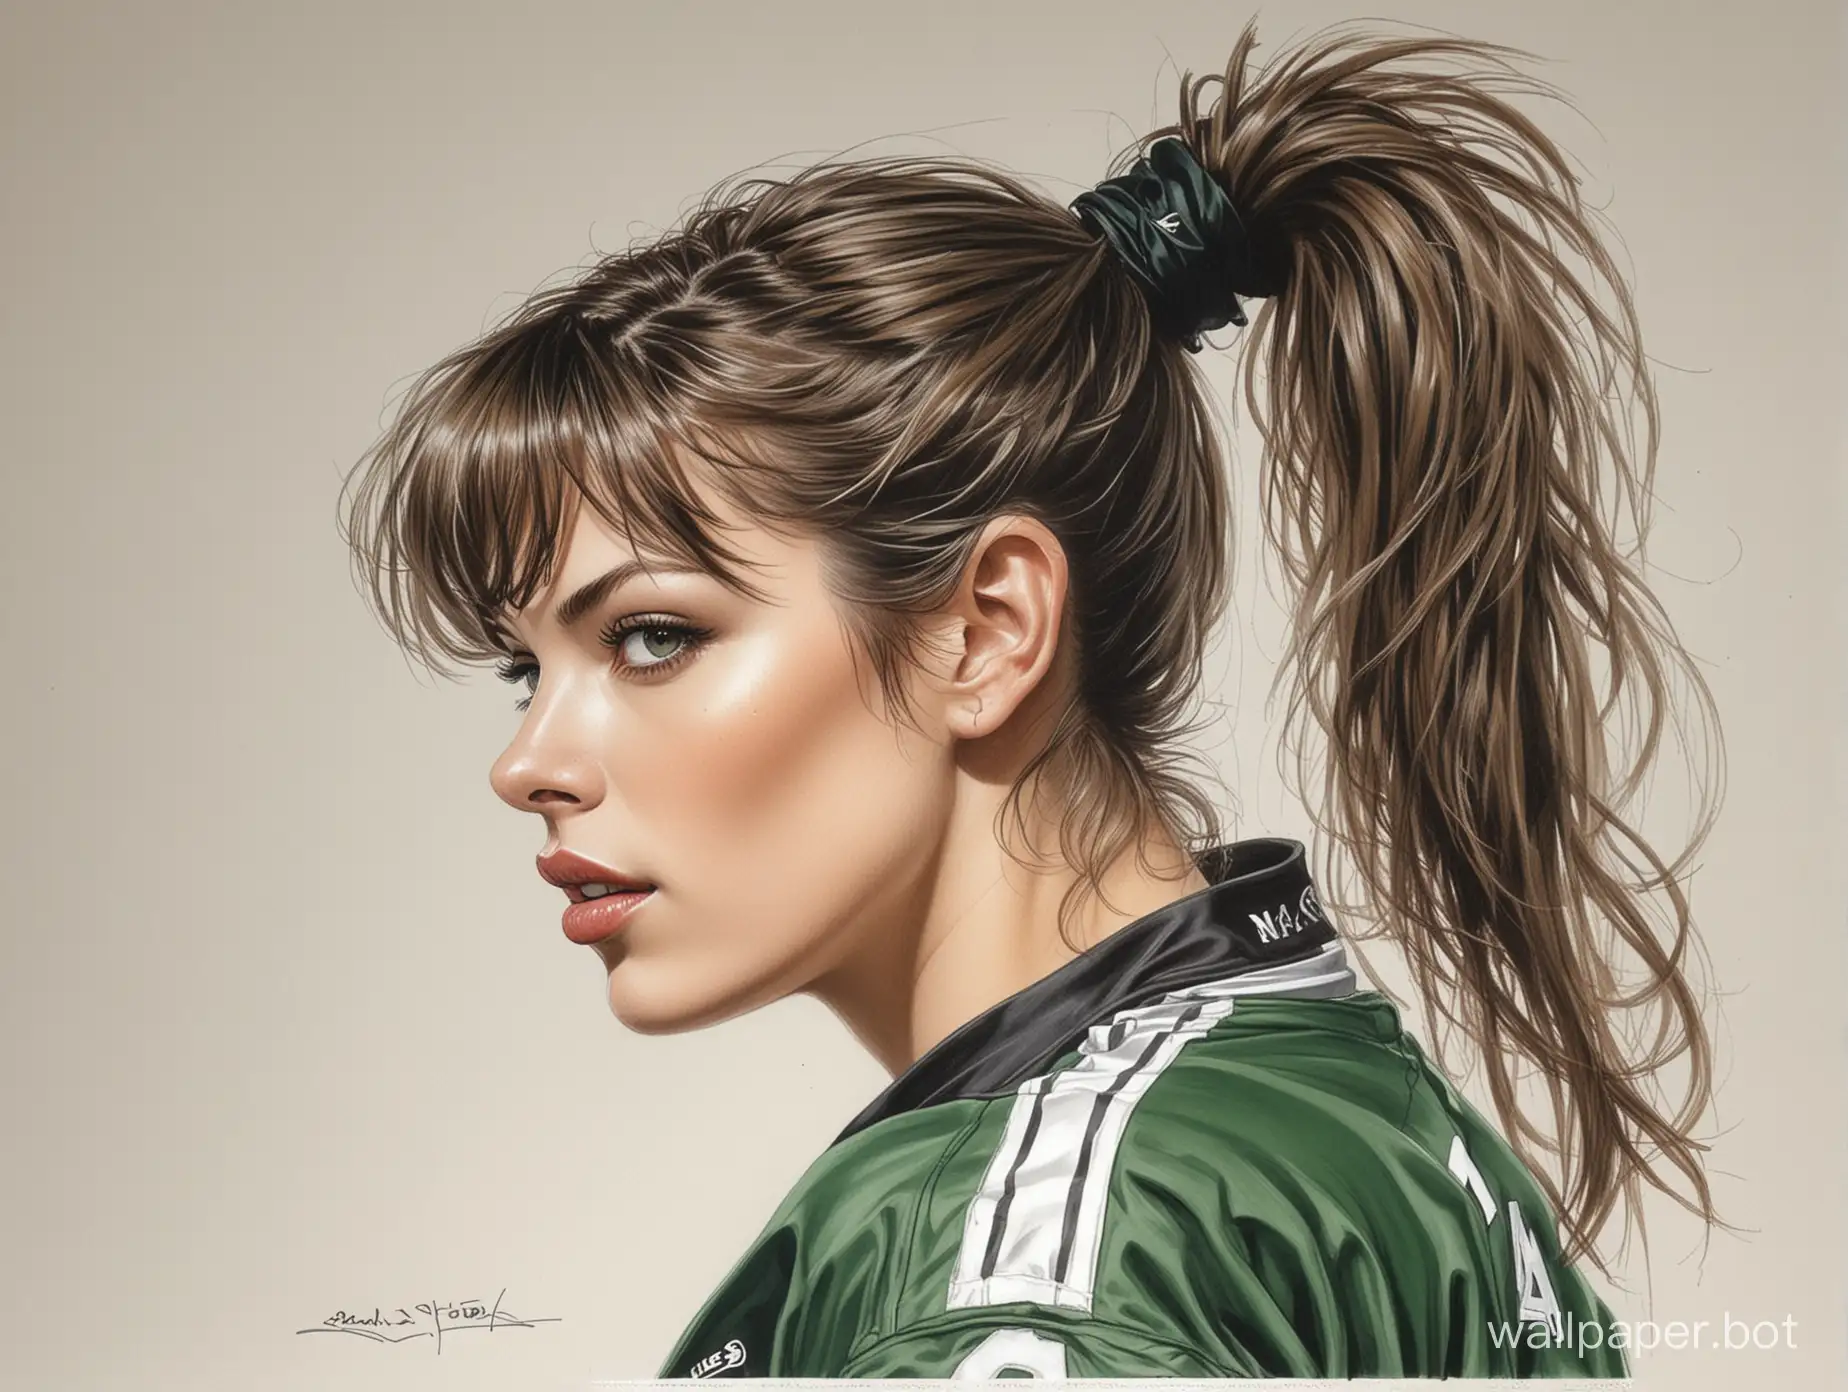 Portrait-Sketch-of-Mila-Jovovich-in-Stylish-BlackGreen-Soccer-Uniform